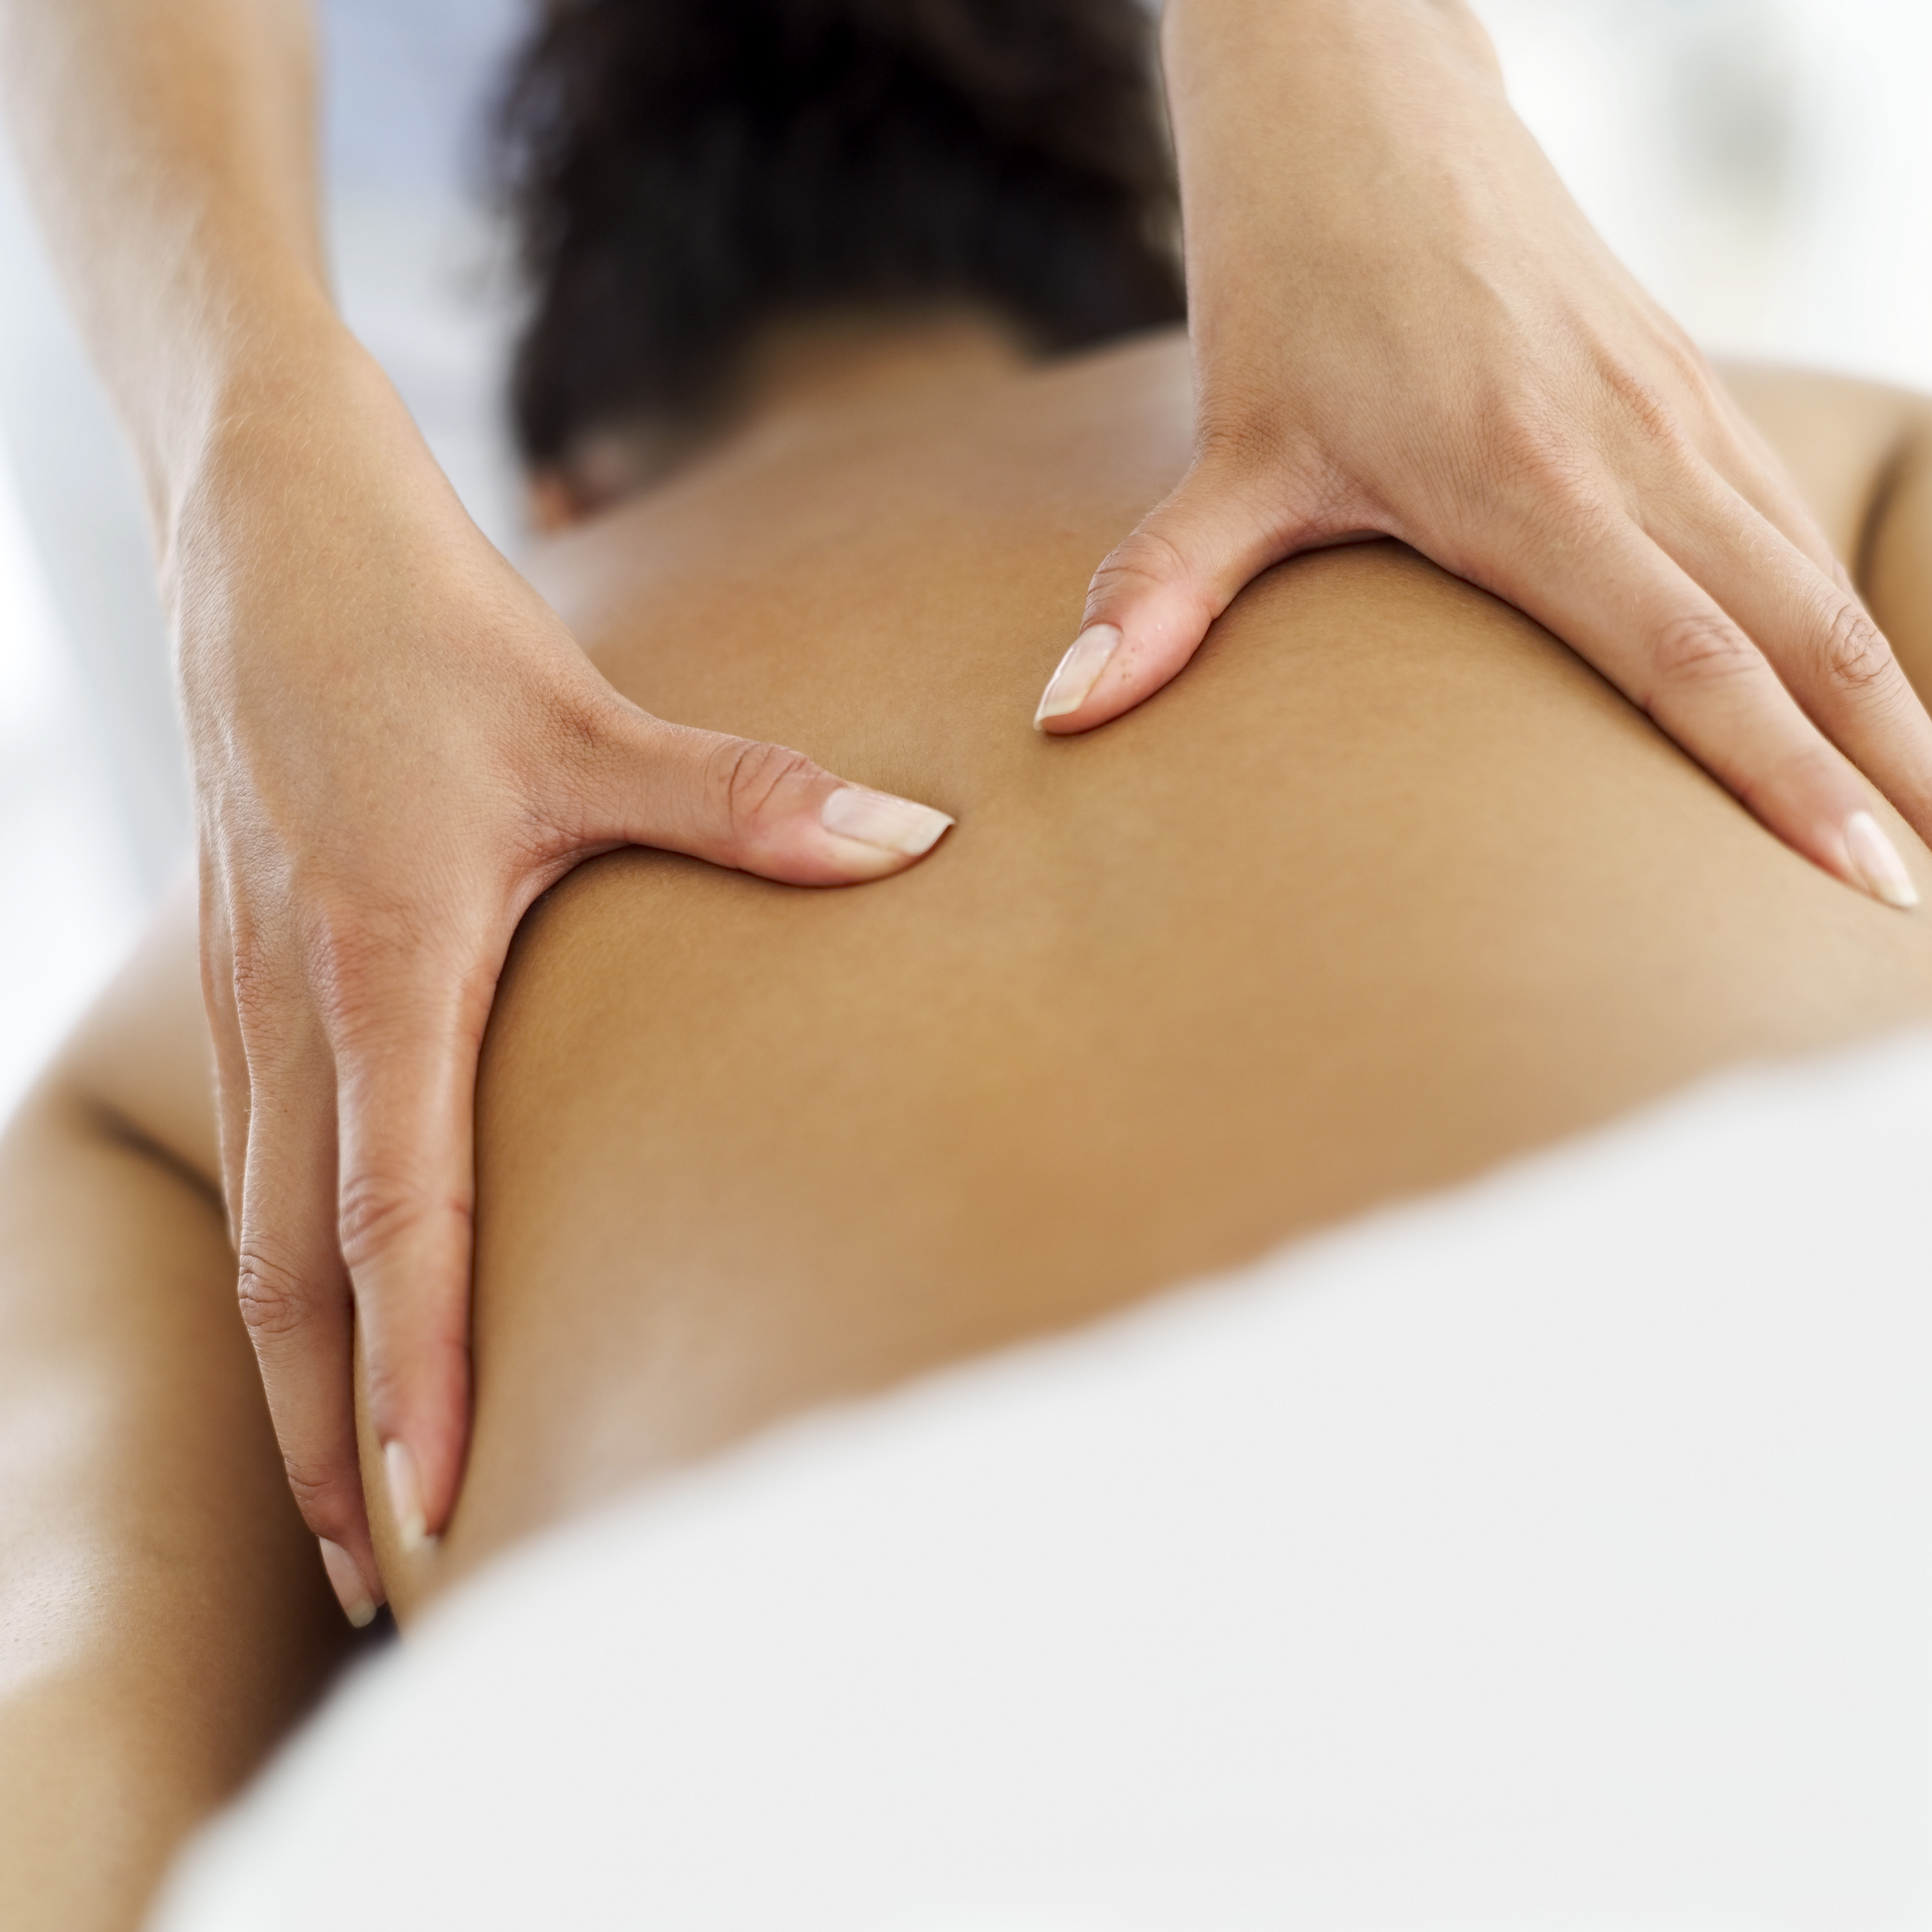 Wellness: The Health Benefits of Massage